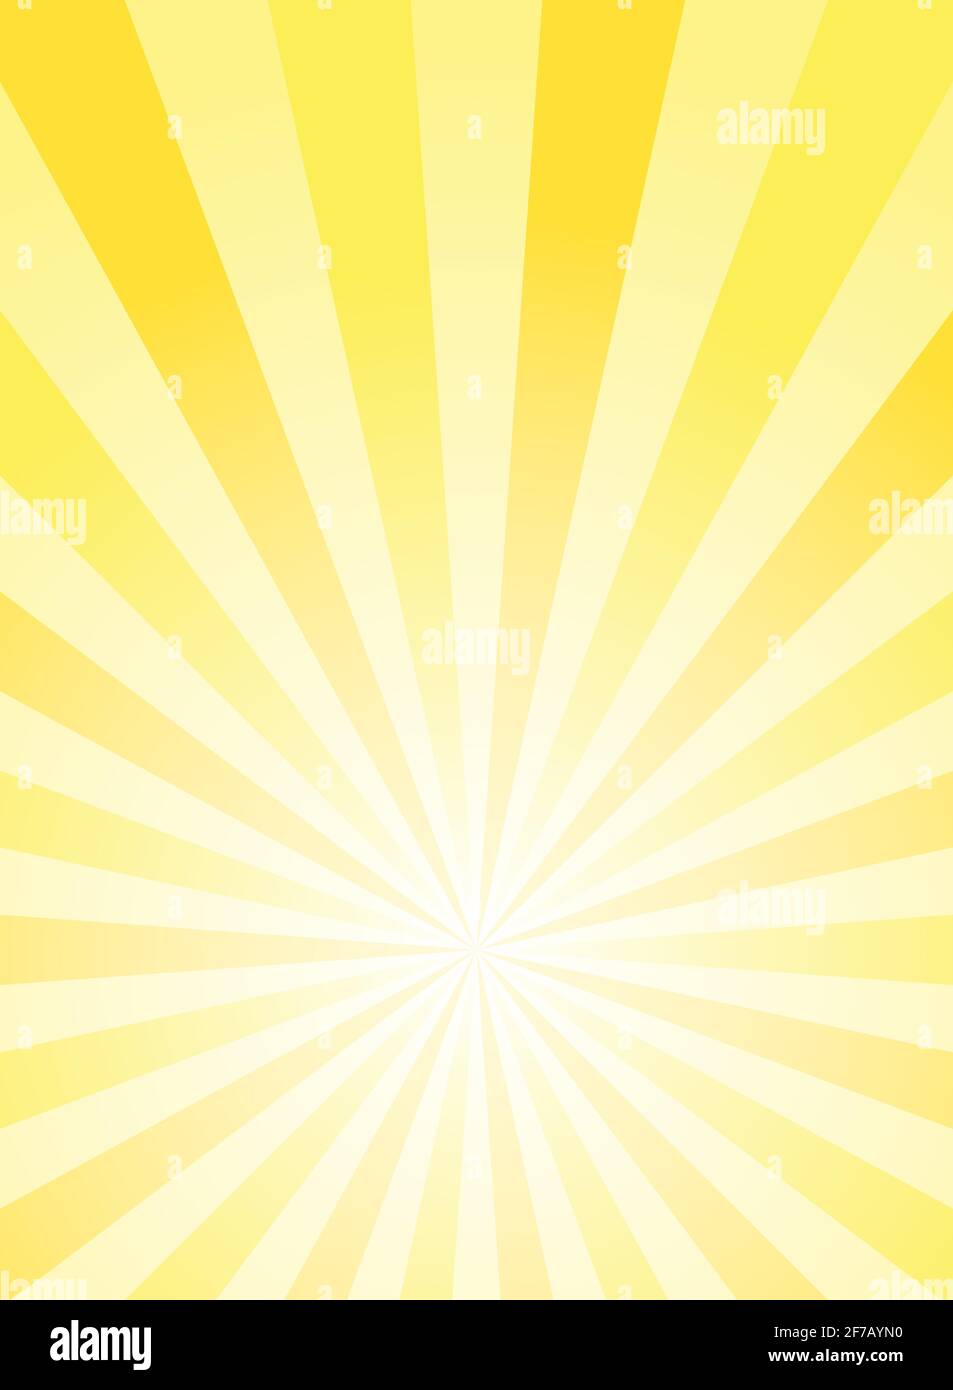 Sunlight vertical abstract background. Gold yellowcolor burst background. Vector illustration. Sun beam ray sunburst pattern background. Retro bright Stock Vector